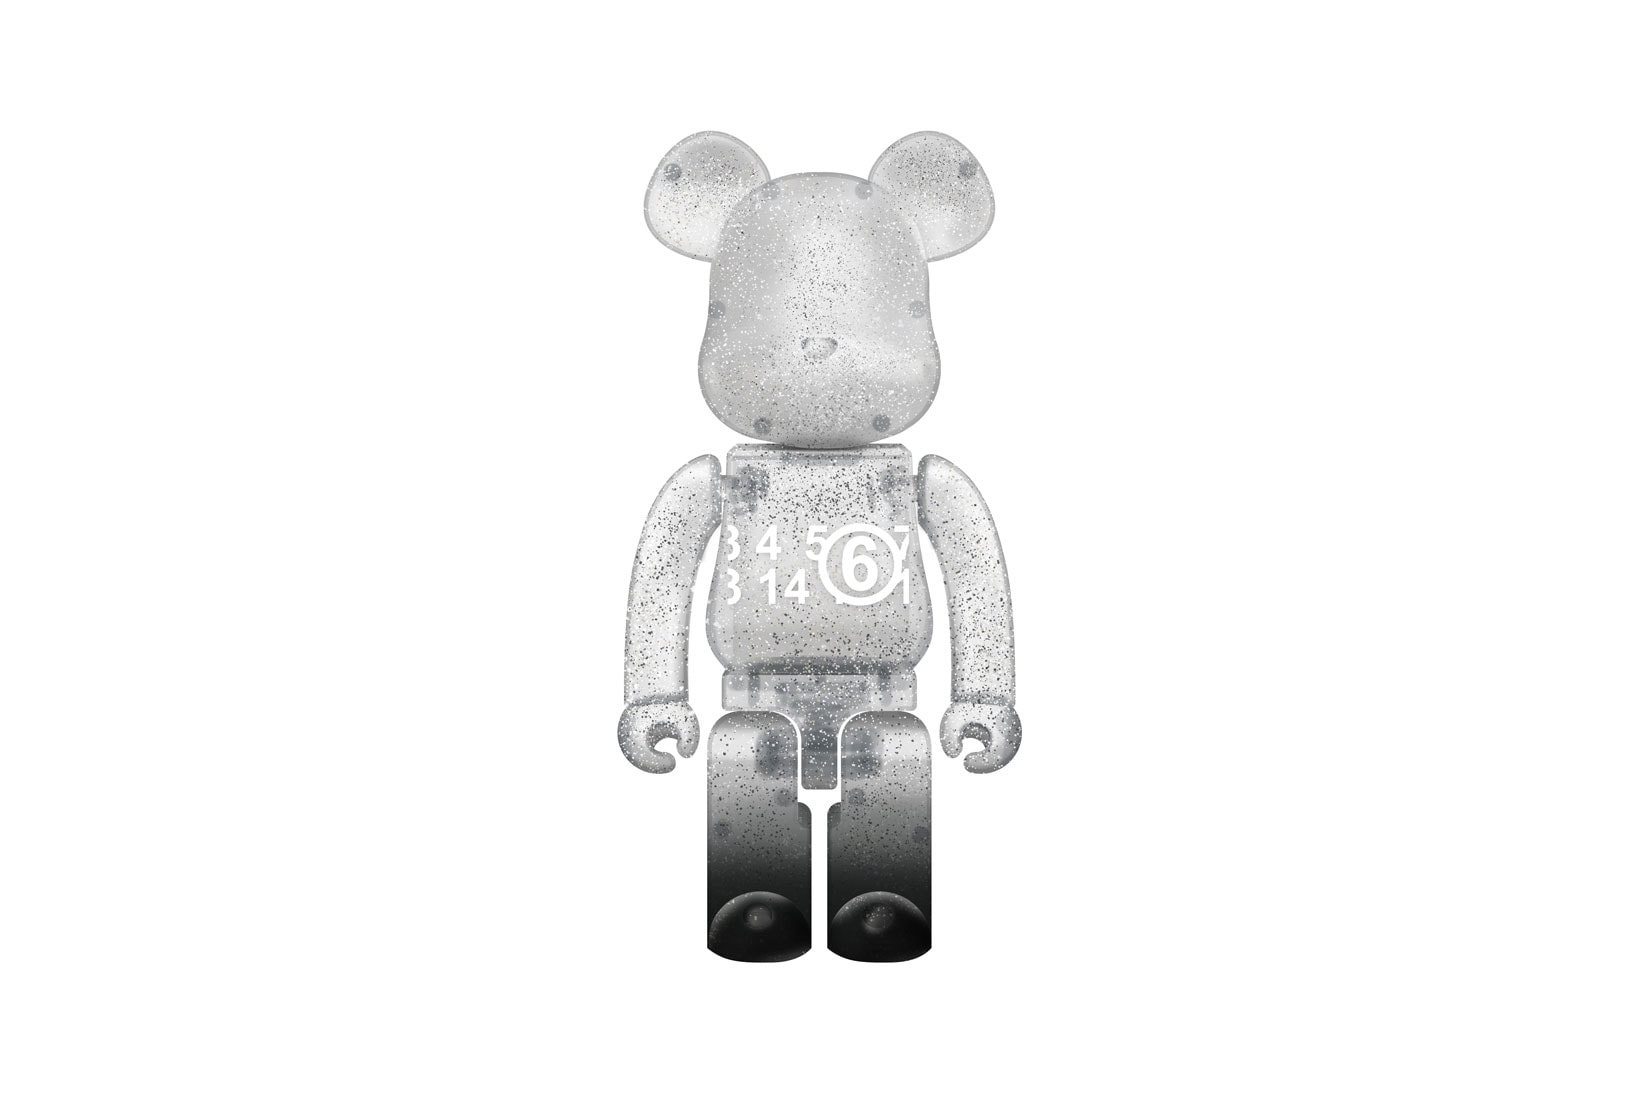 MM6 Maison Margiela BE@RBRICK Collaboration Glitter Figurine Toy Silver